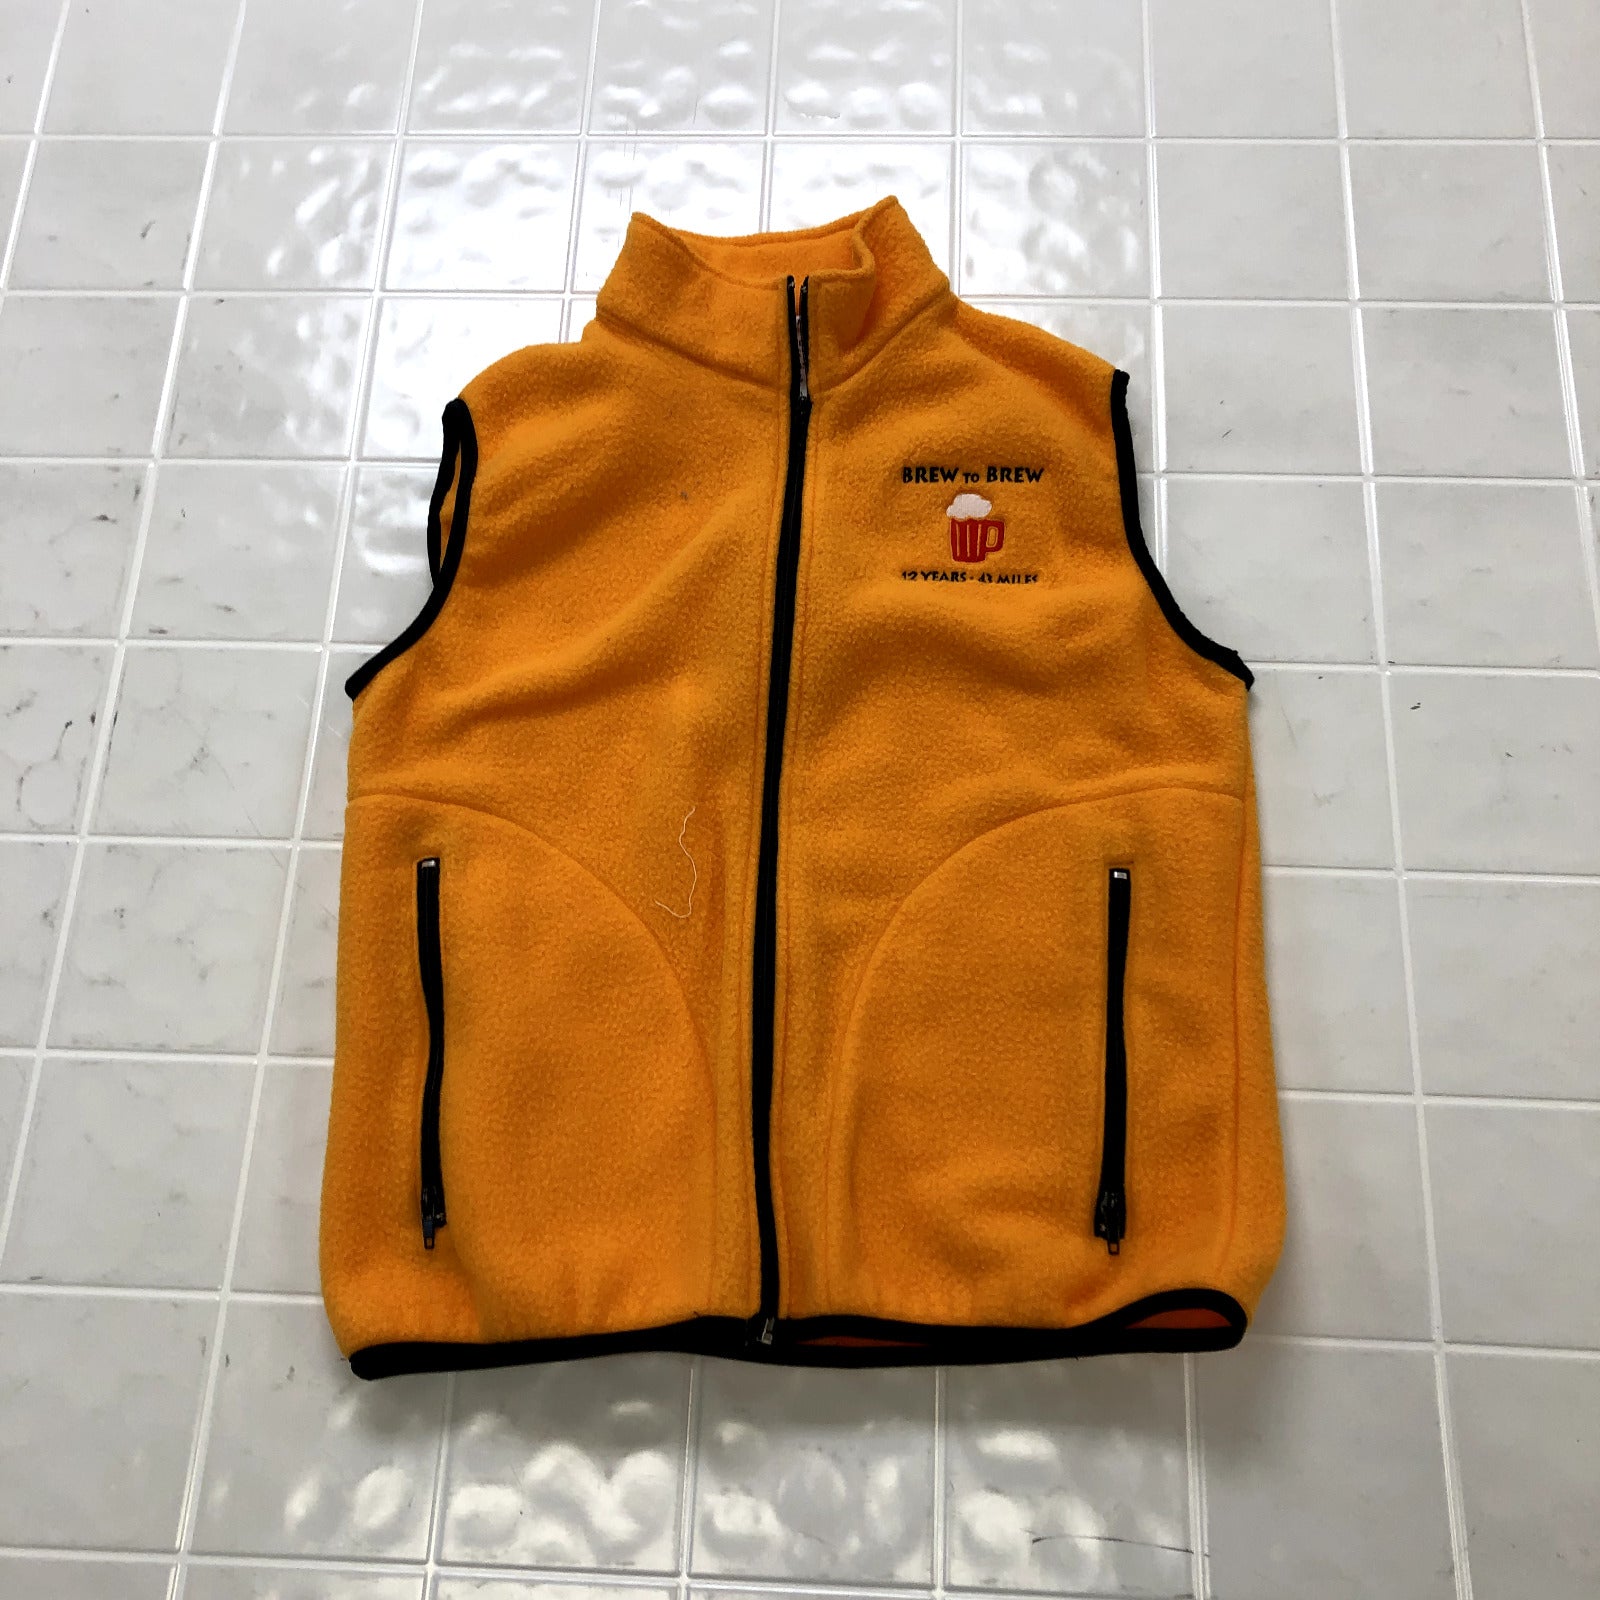 Leslie Jordan Orange Fleece Mock Neck Regular Fit Sleeveless Jacket Adult Size S